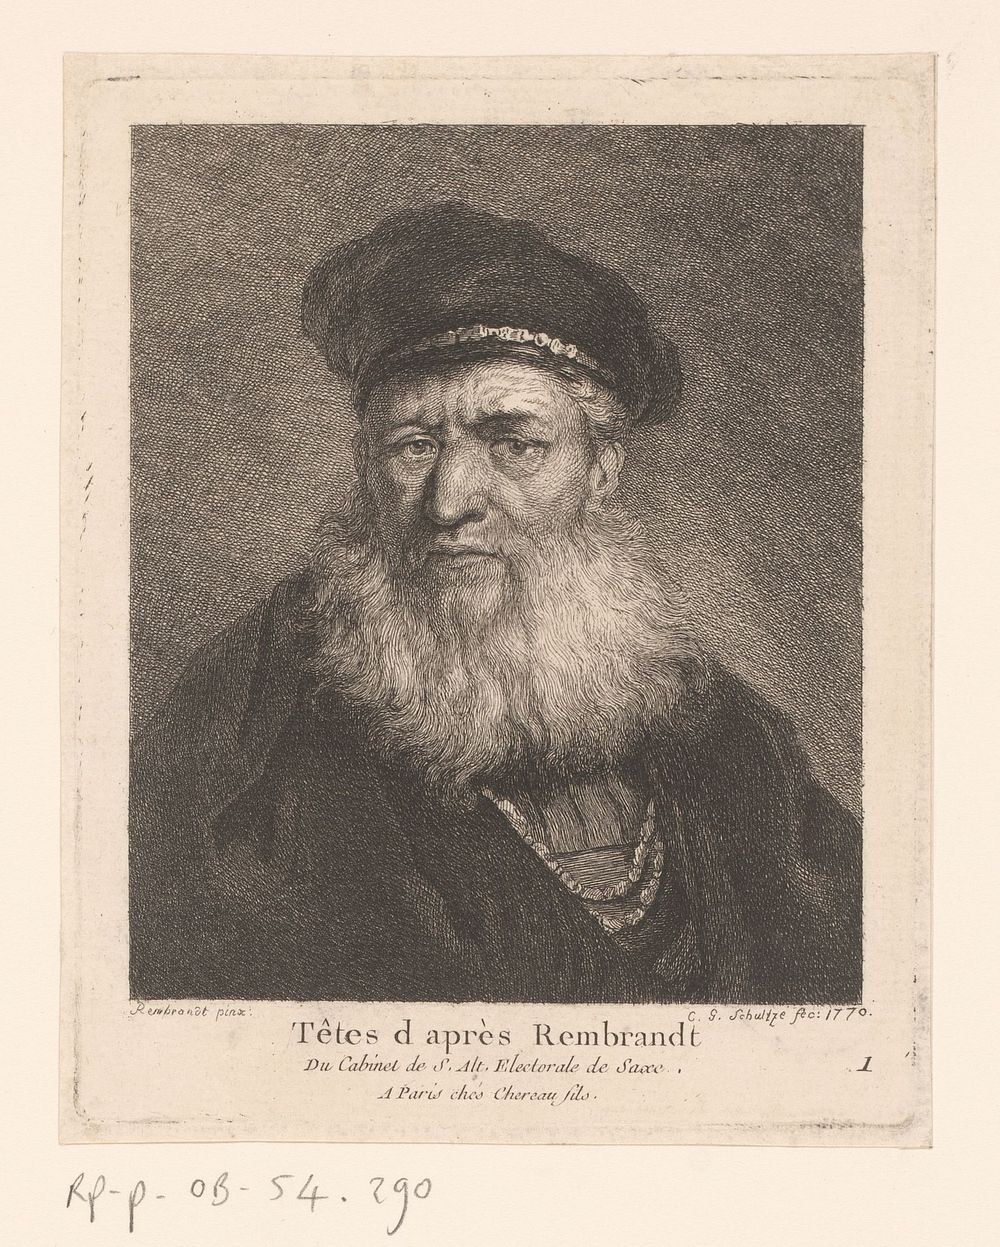 Oude man met baret en baard (1770) by Christian Gottfried Schultze, Rembrandt van Rijn and François Chéreau II